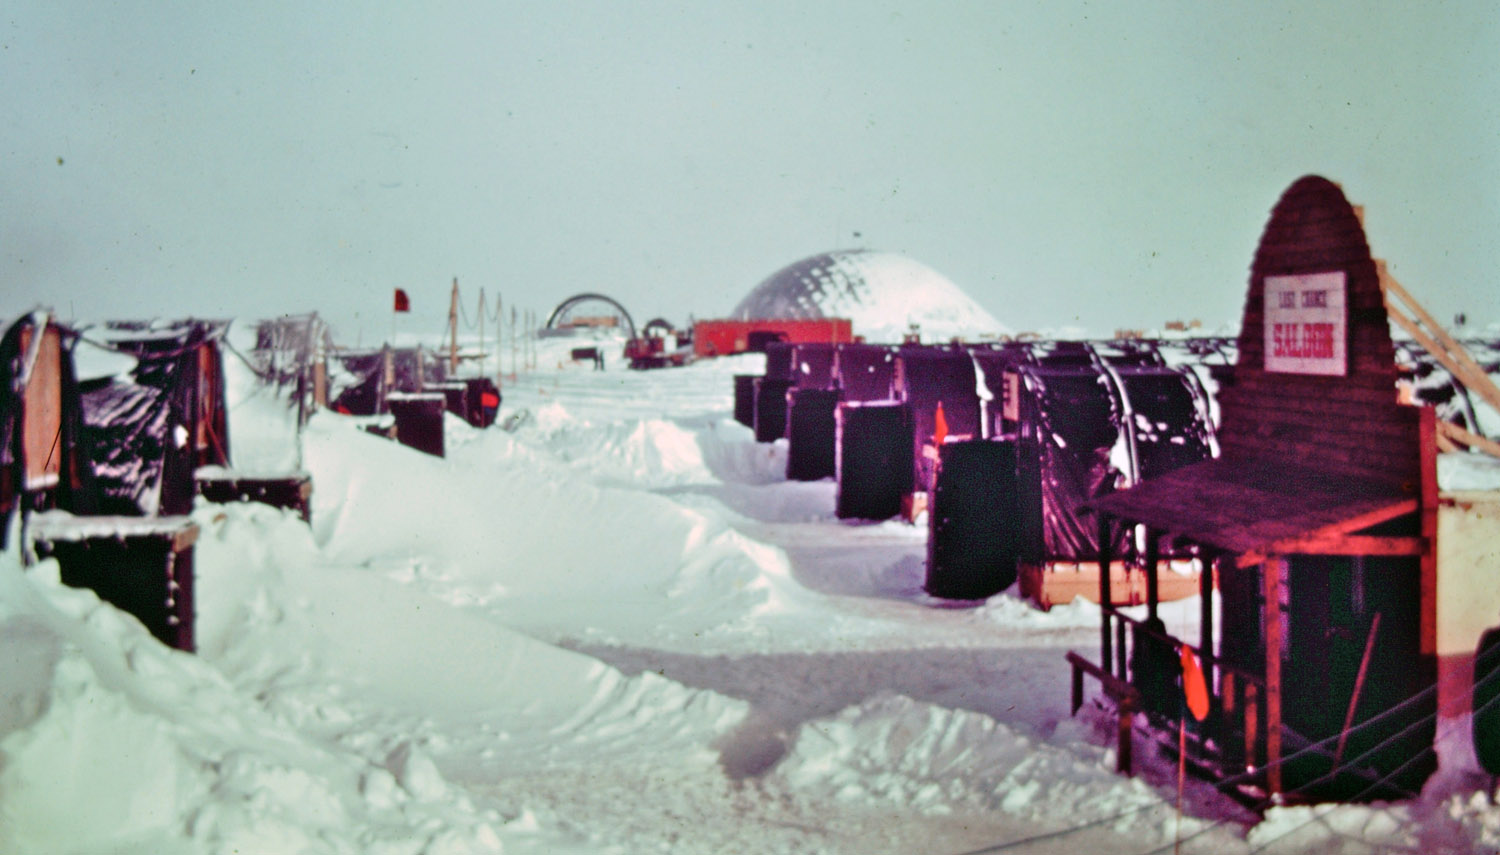 South Pole Station, Antarctica -  Construction camp